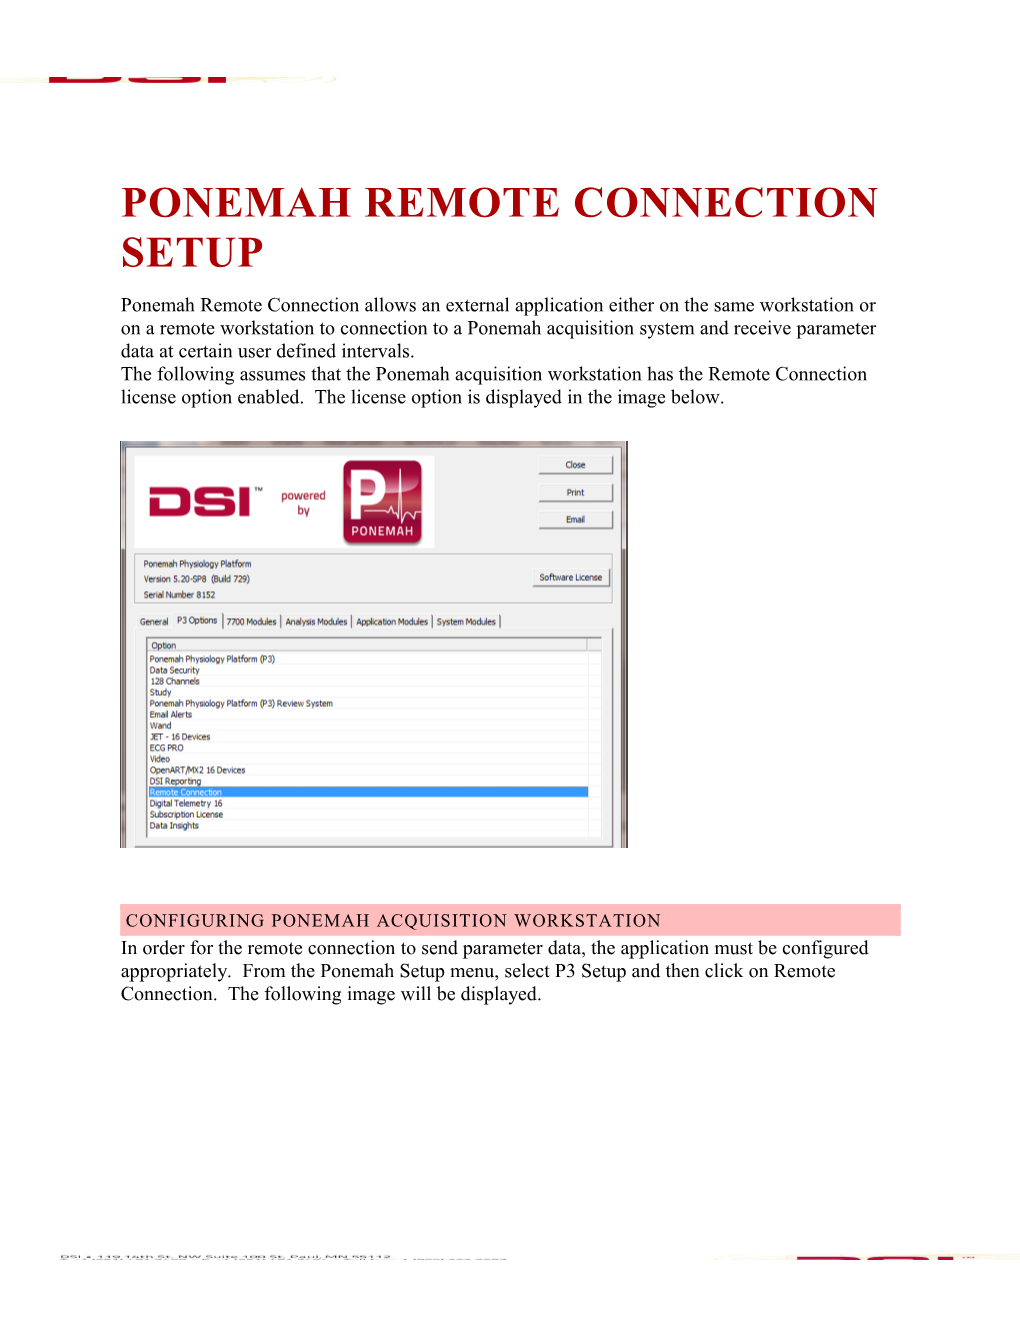 Ponemah Remote Connection Setup